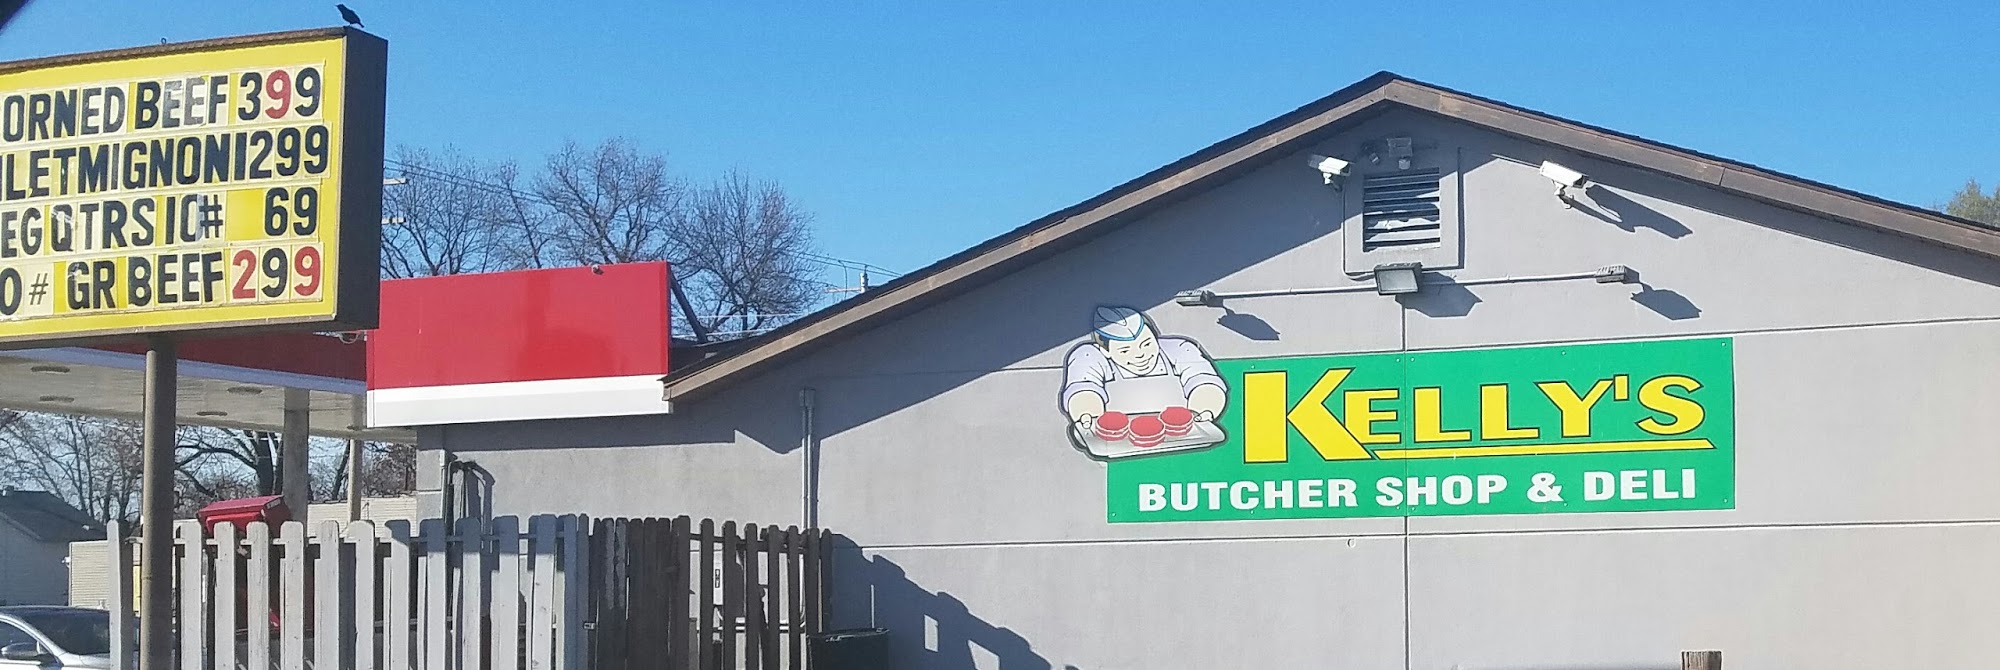 Kelly's Butcher Shop & Deli